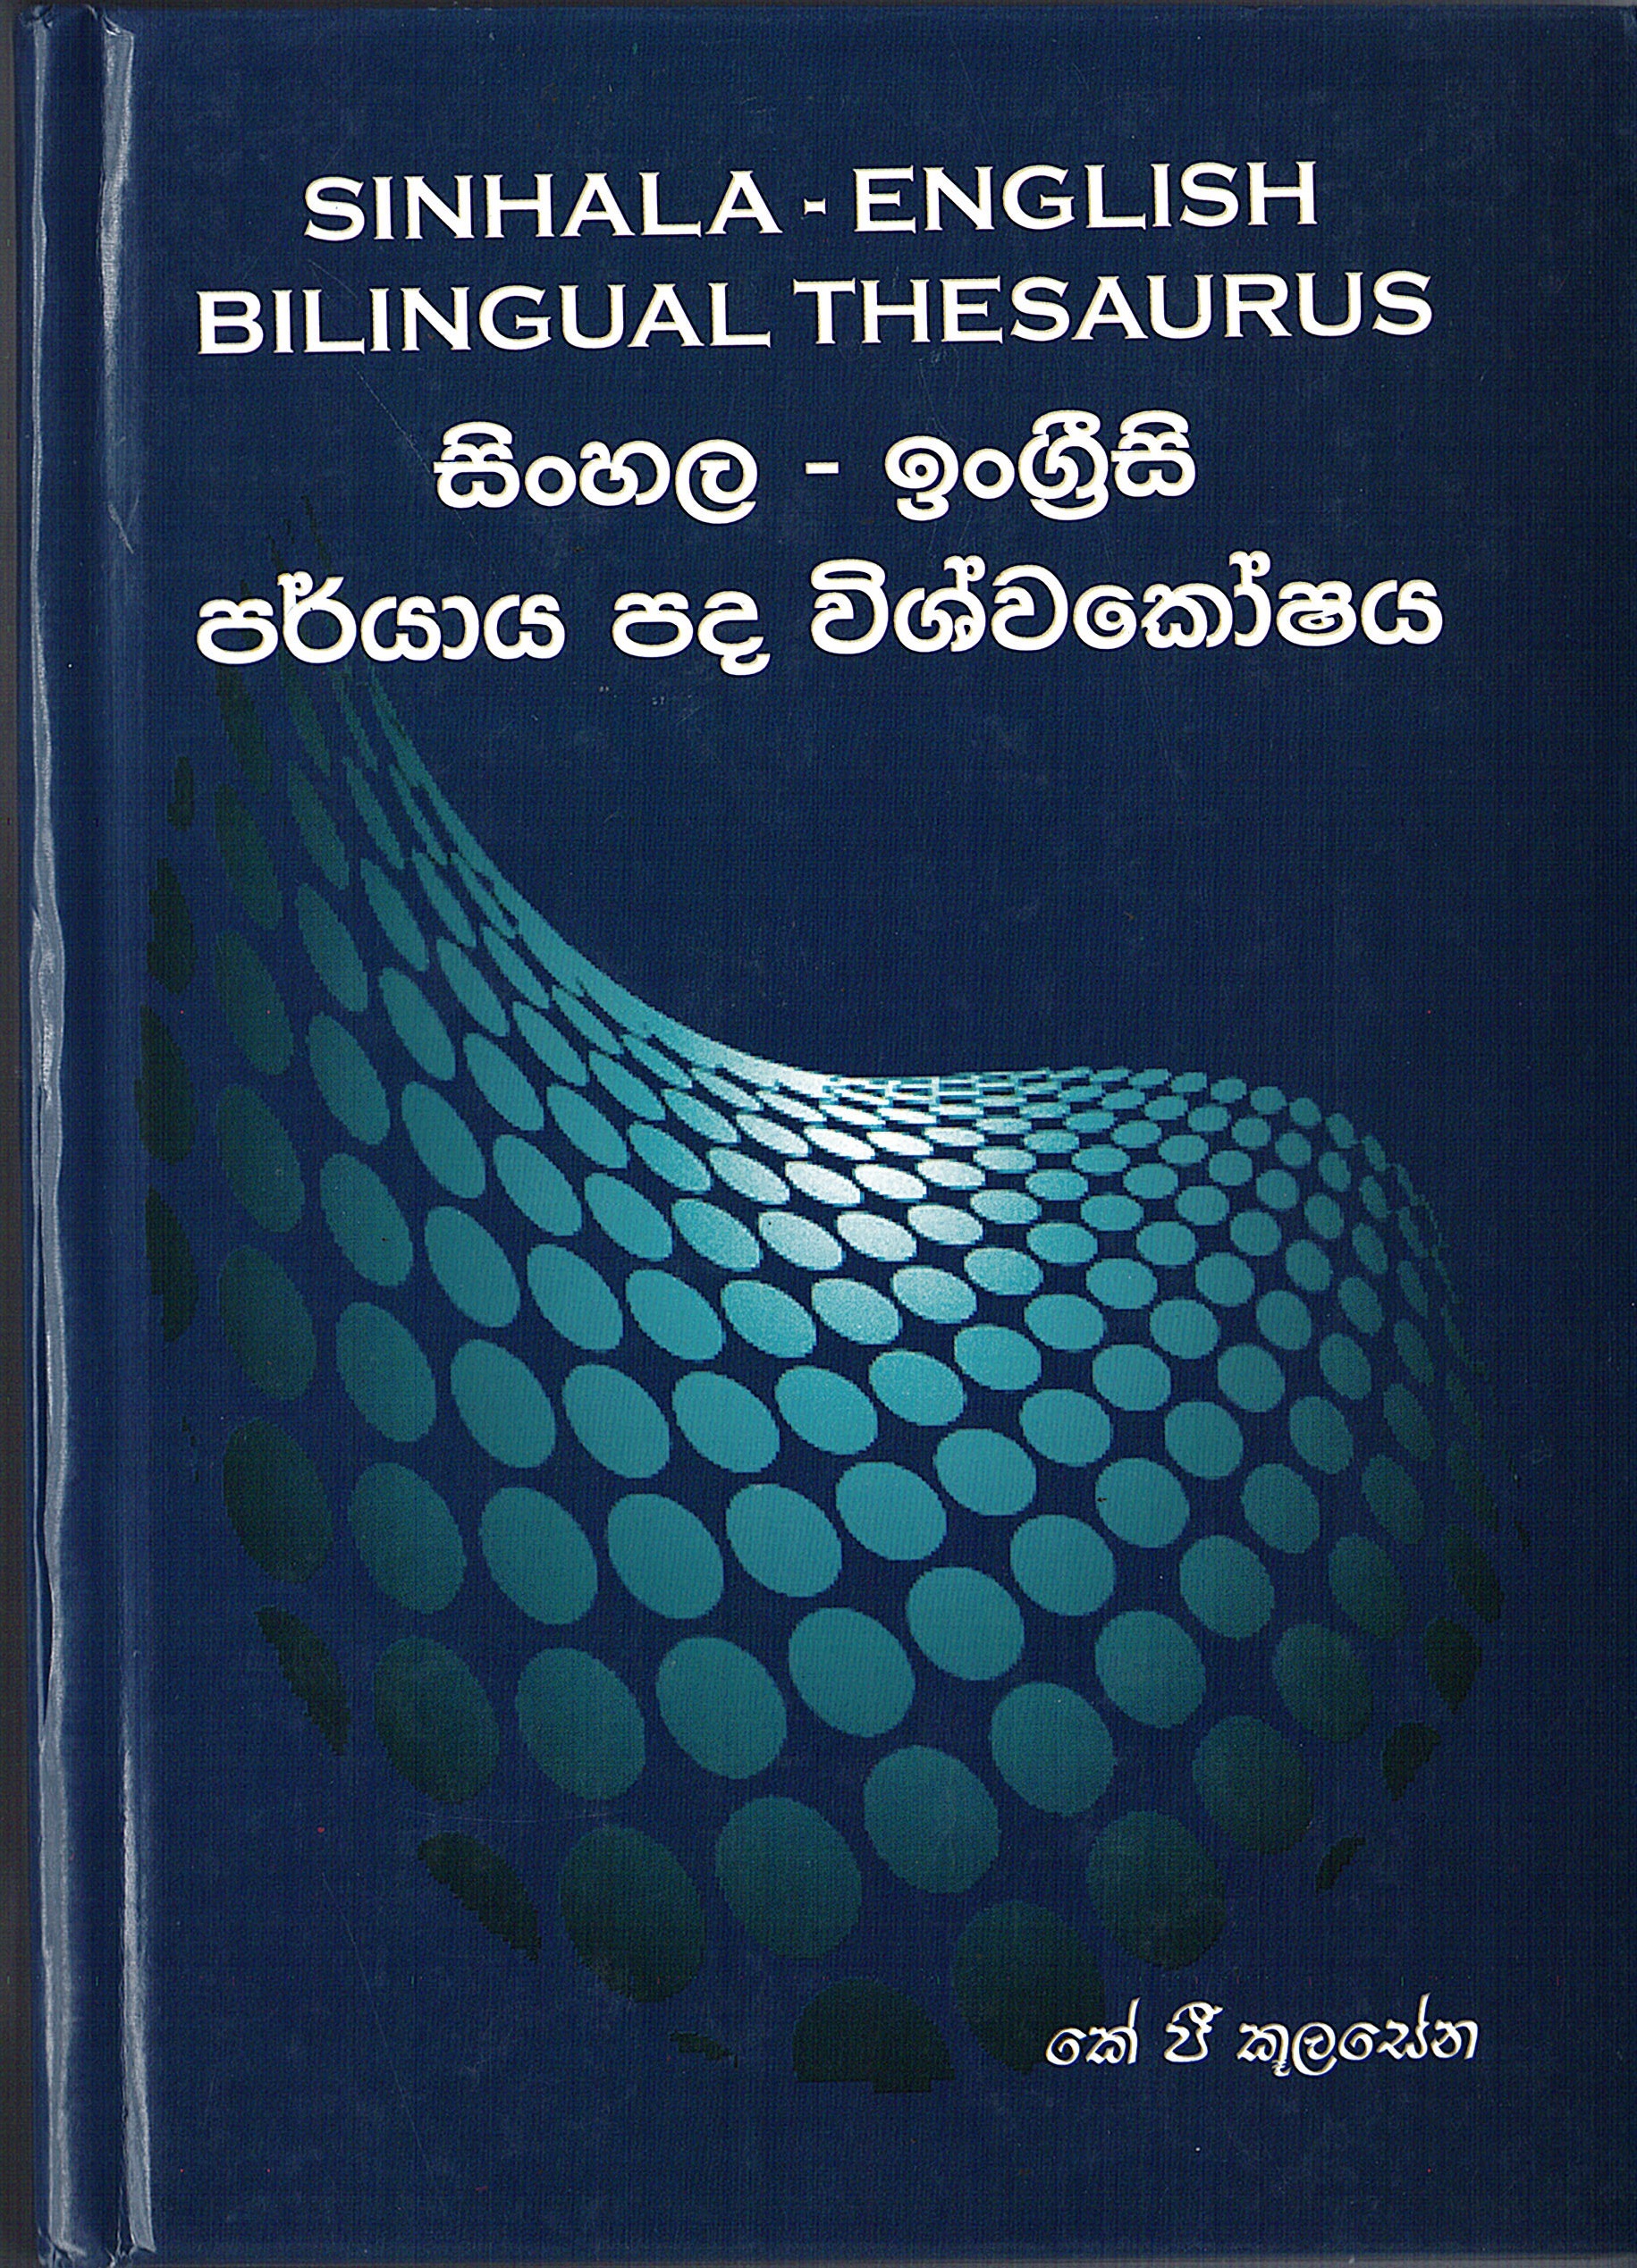 Sinhala - English Bilingual Thesaurus 